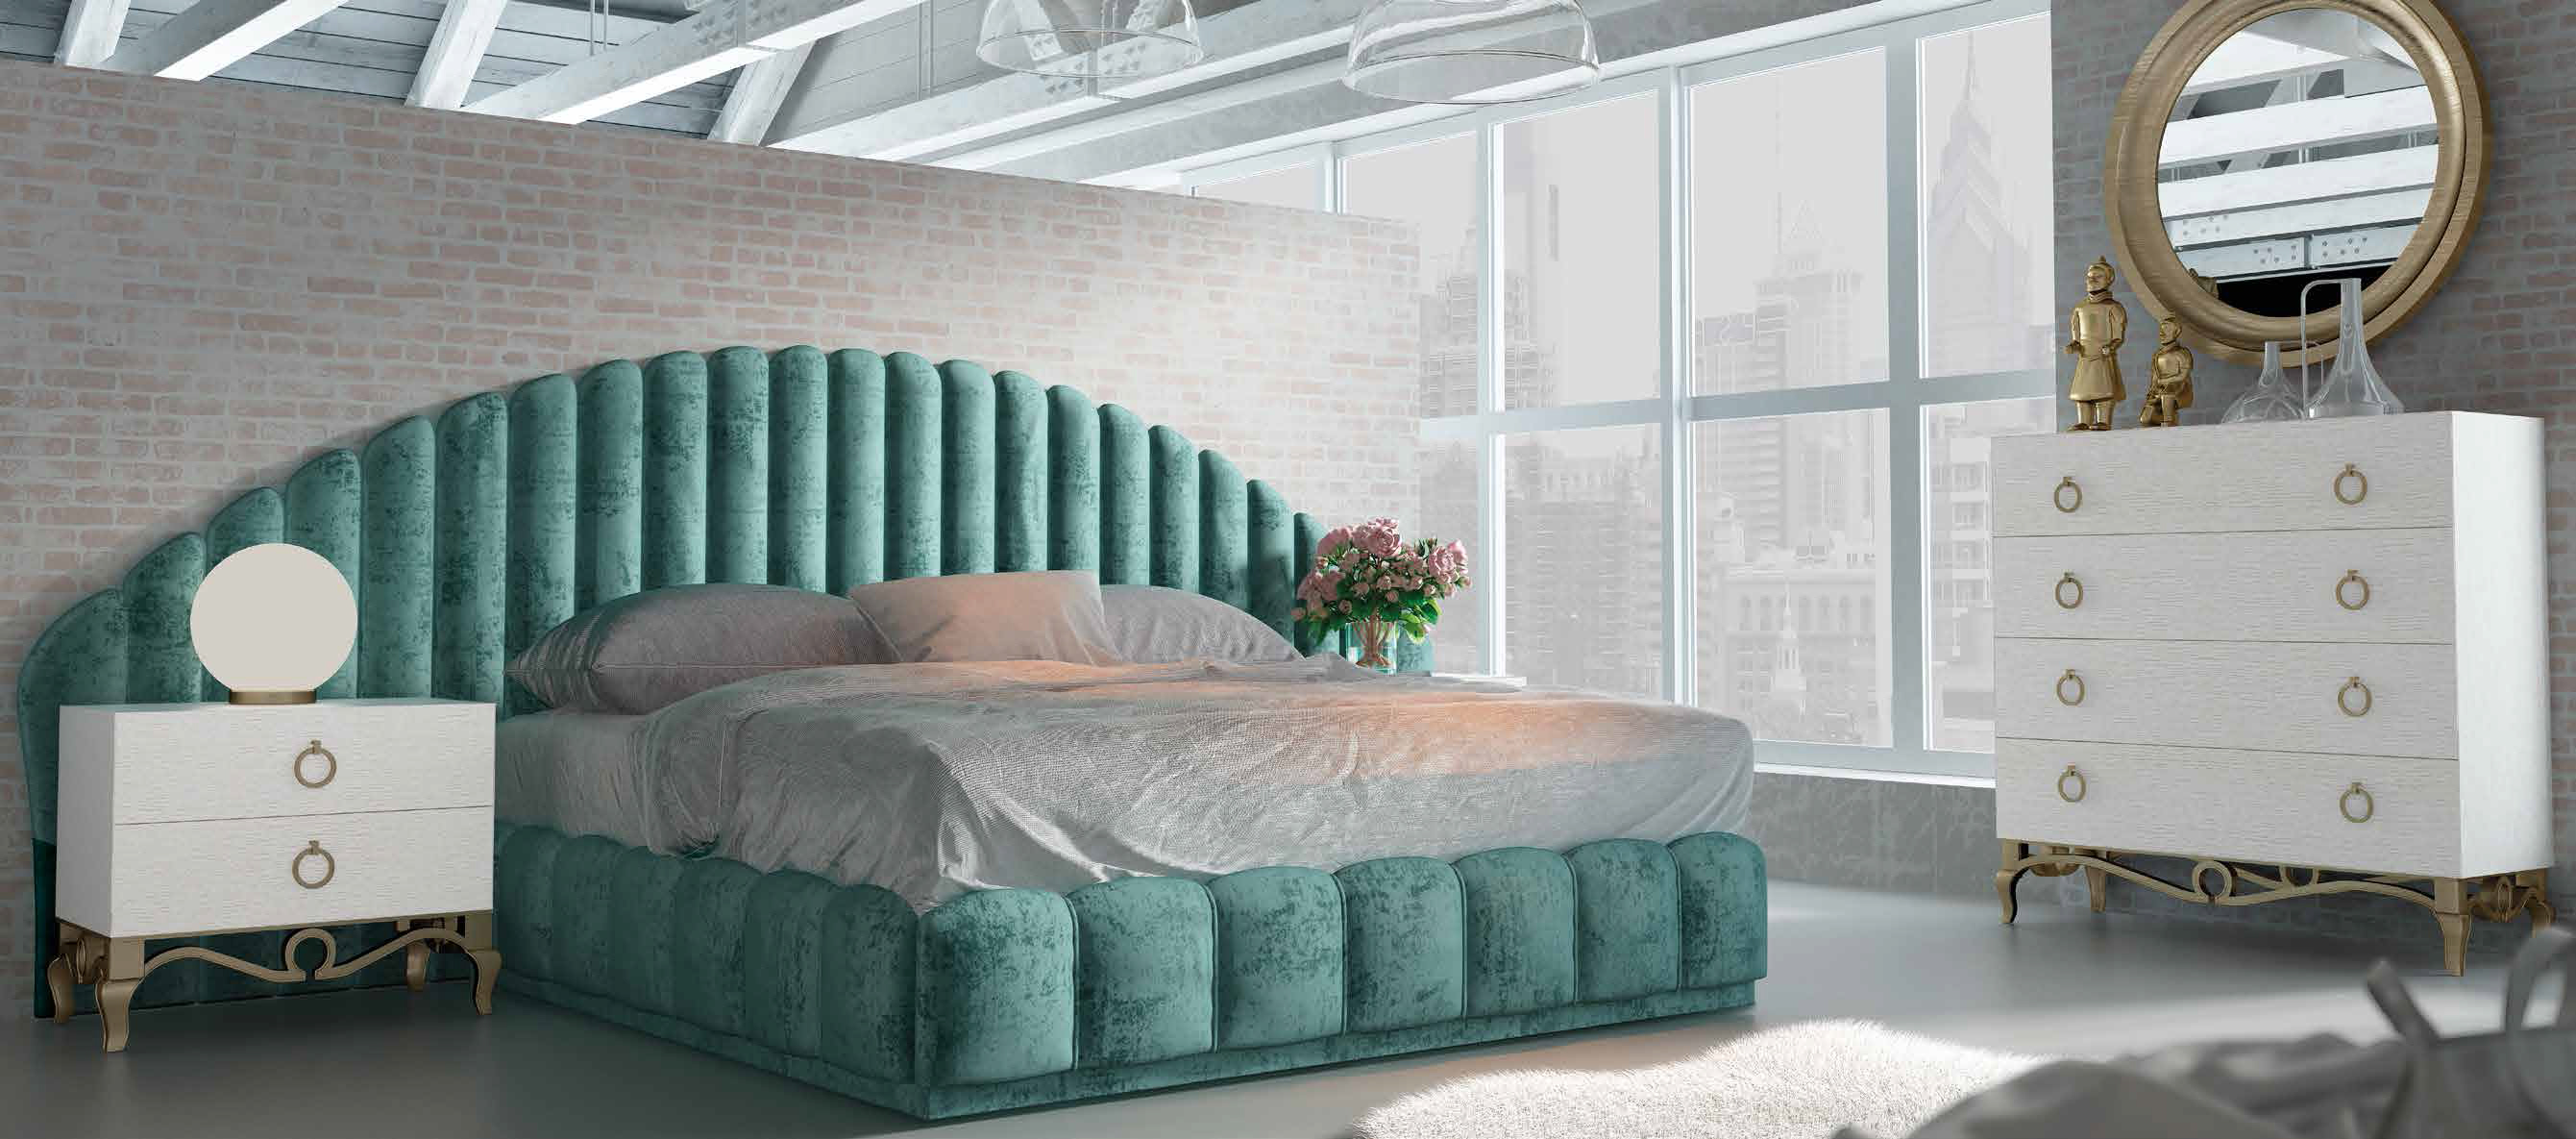 Brands Franco Furniture Bedrooms vol2, Spain DOR 65